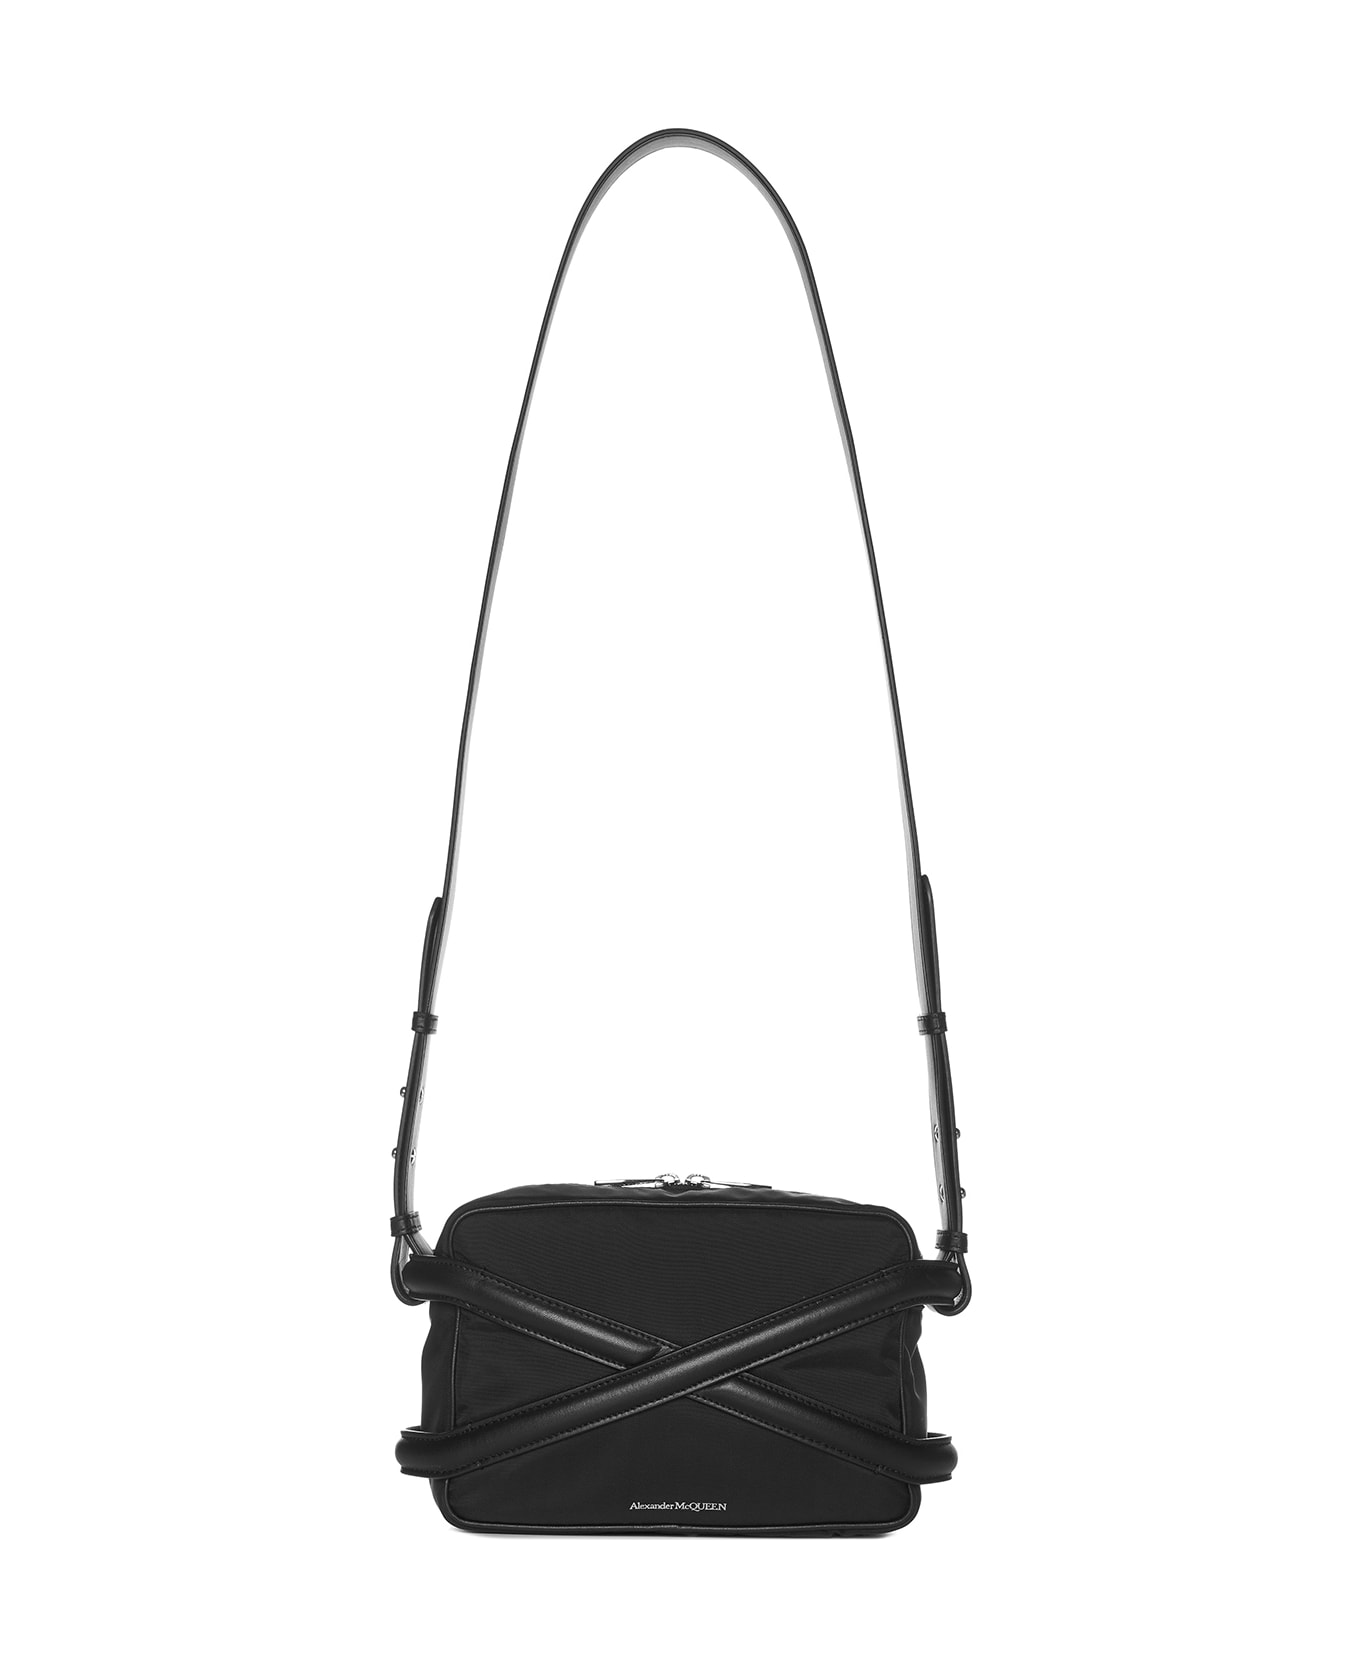 Alexander McQueen Harness Camera Bag - black